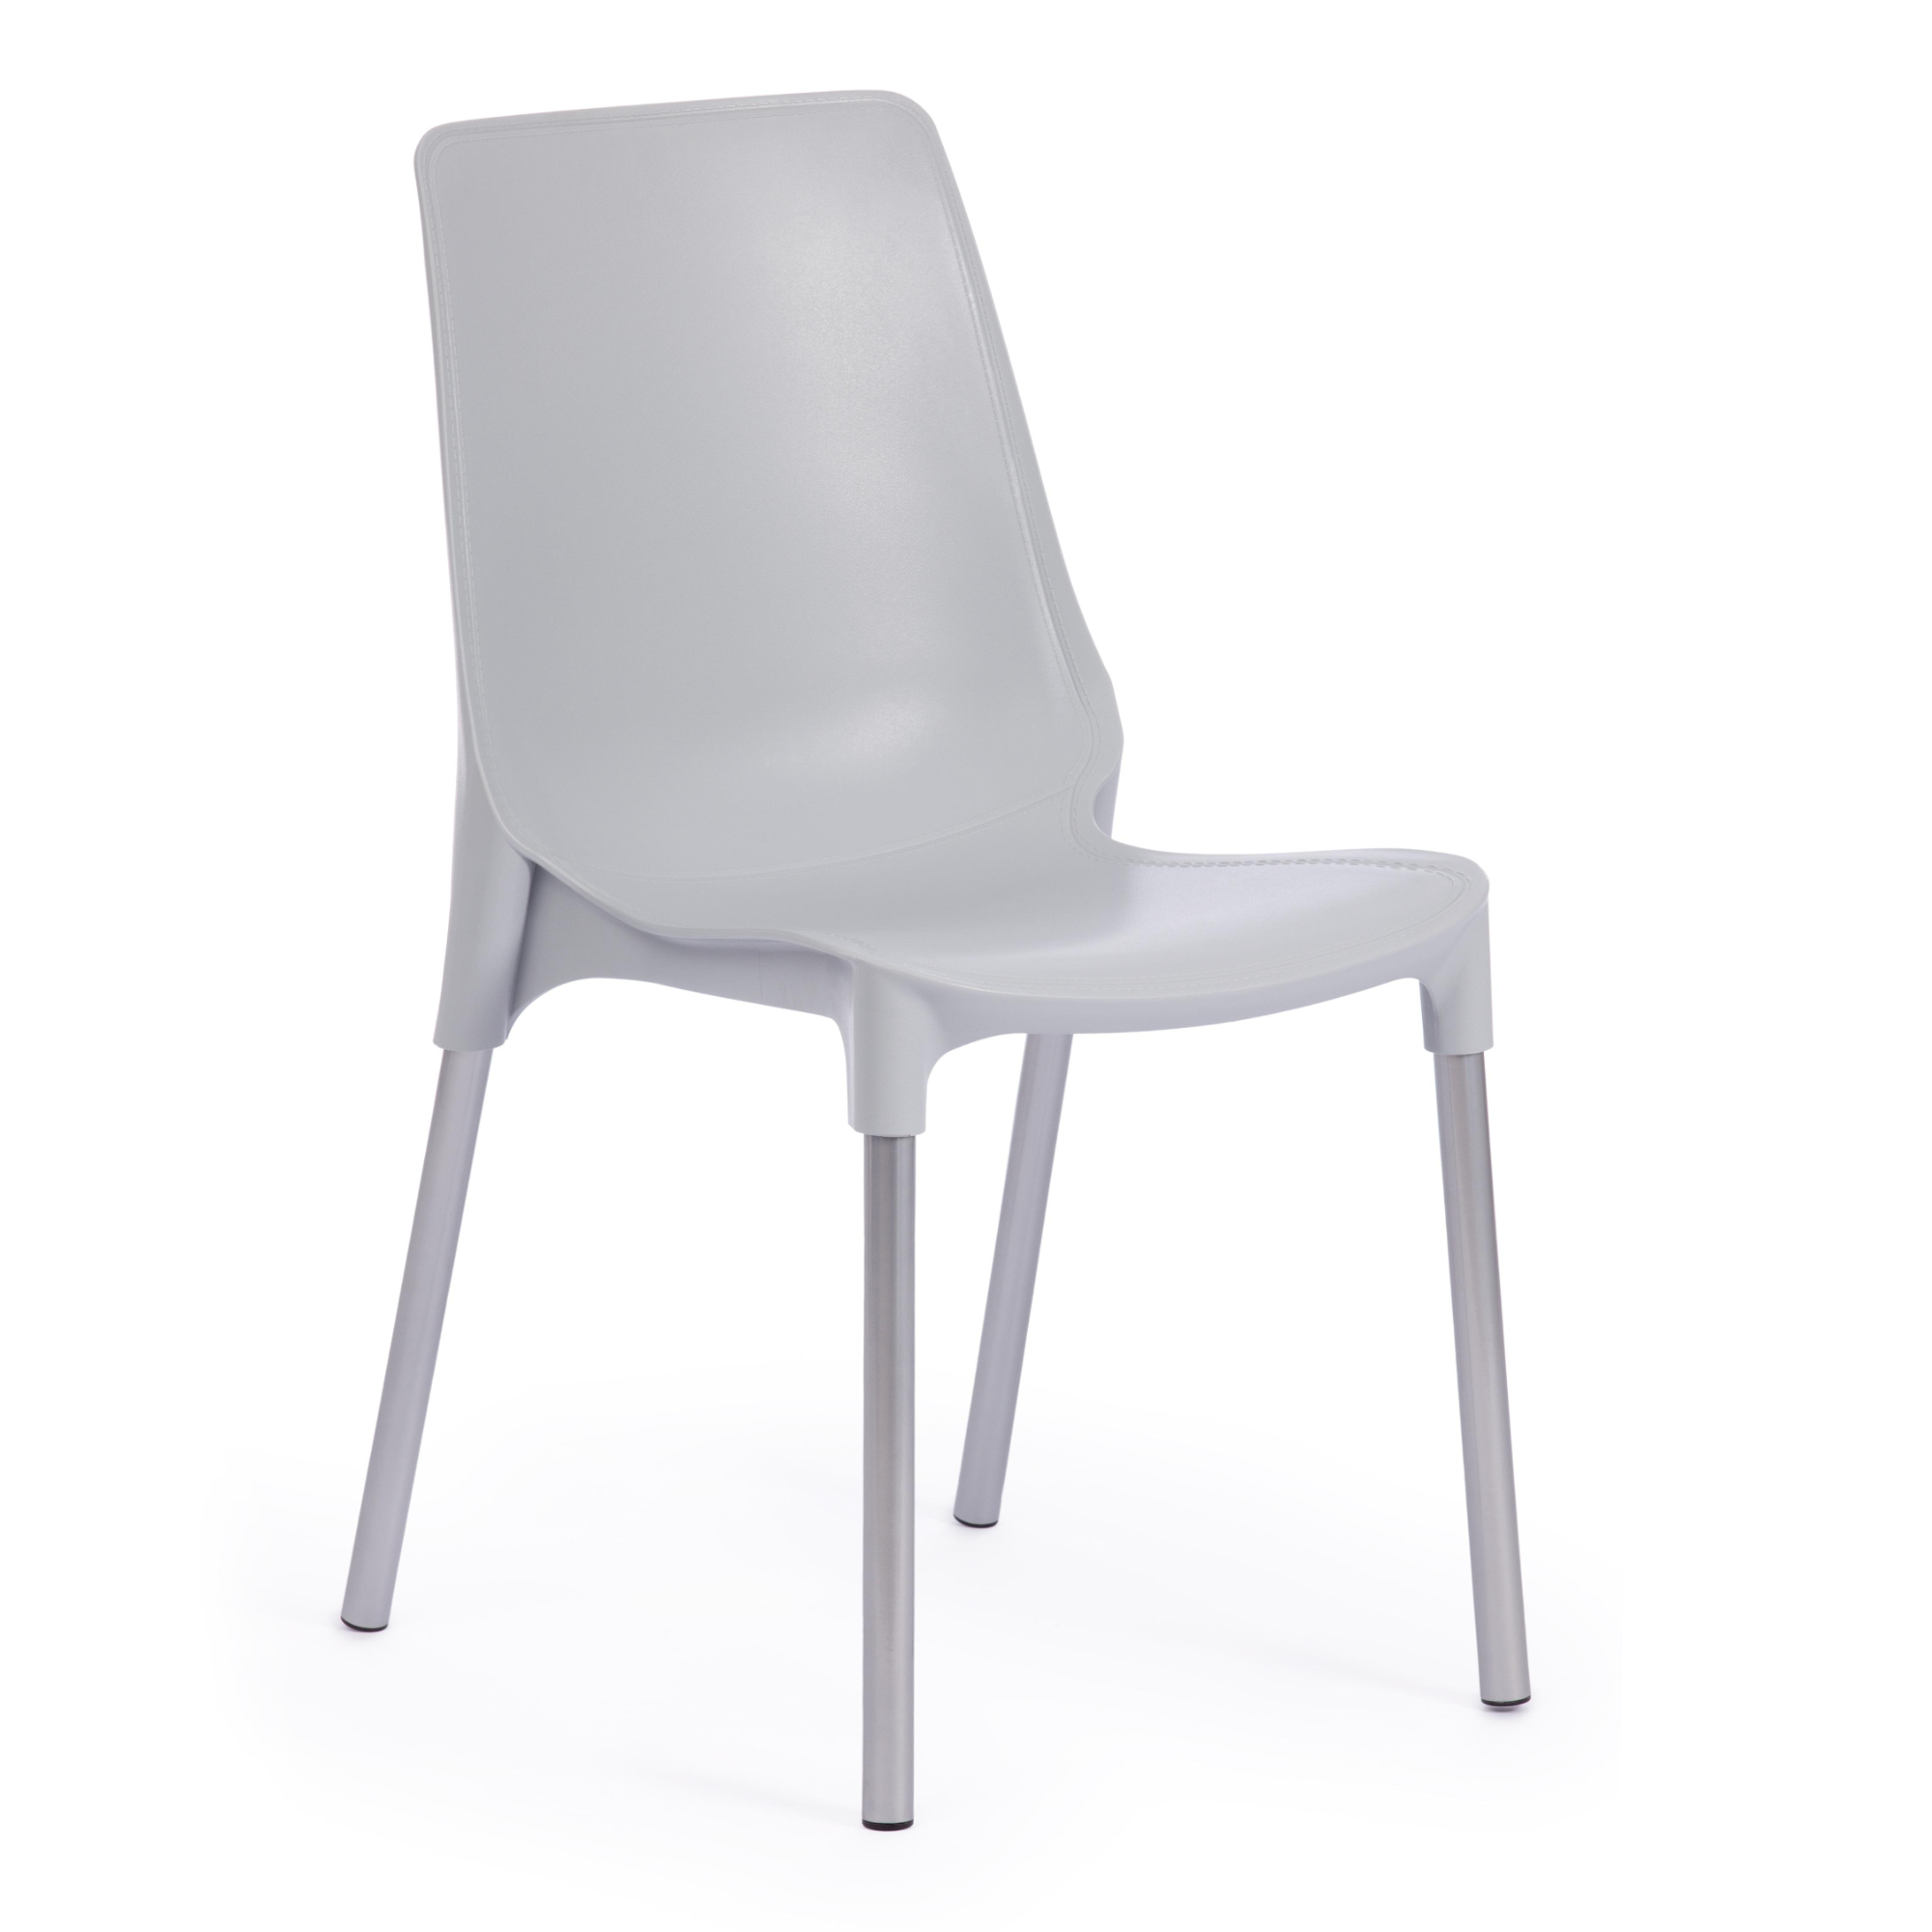 Стул ТС Genius пластиковый серый с хромированными ножками 46х56х84 см стул тс cindy chair пластиковый с ножками из бука белый 45х51х82 см